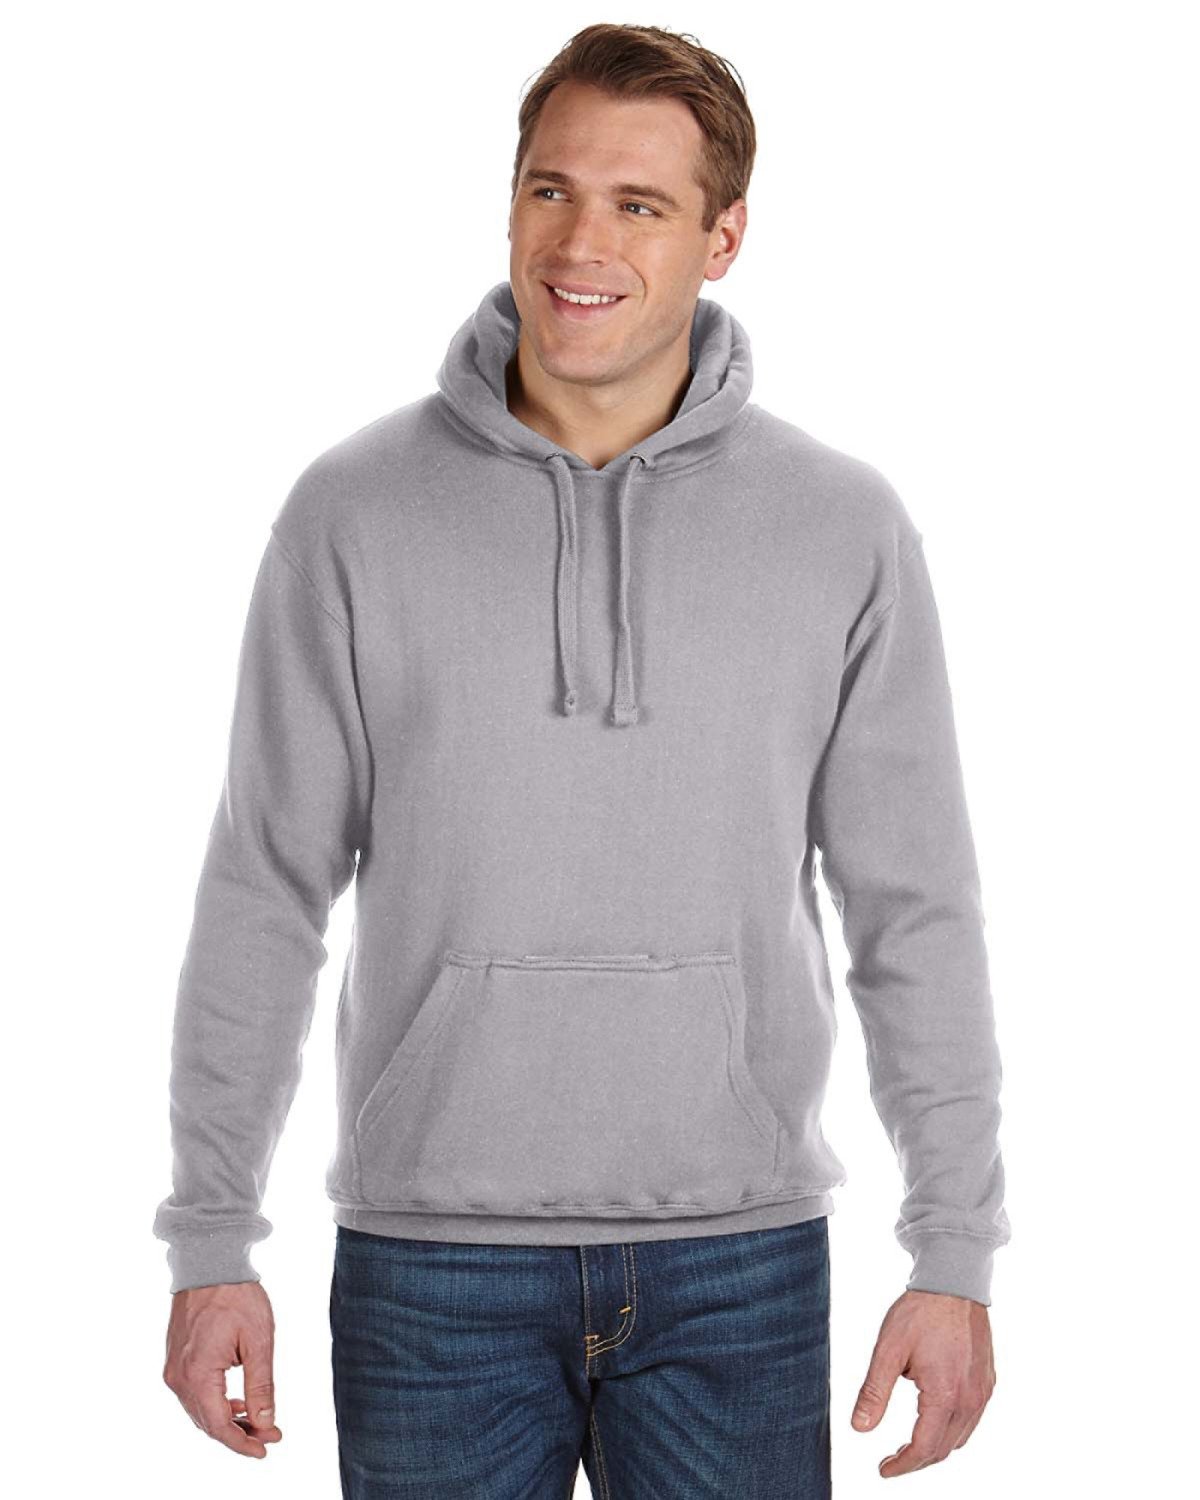 J America Adult Tailgate Fleece alphabroder Pullover | Sweatshirt Hooded